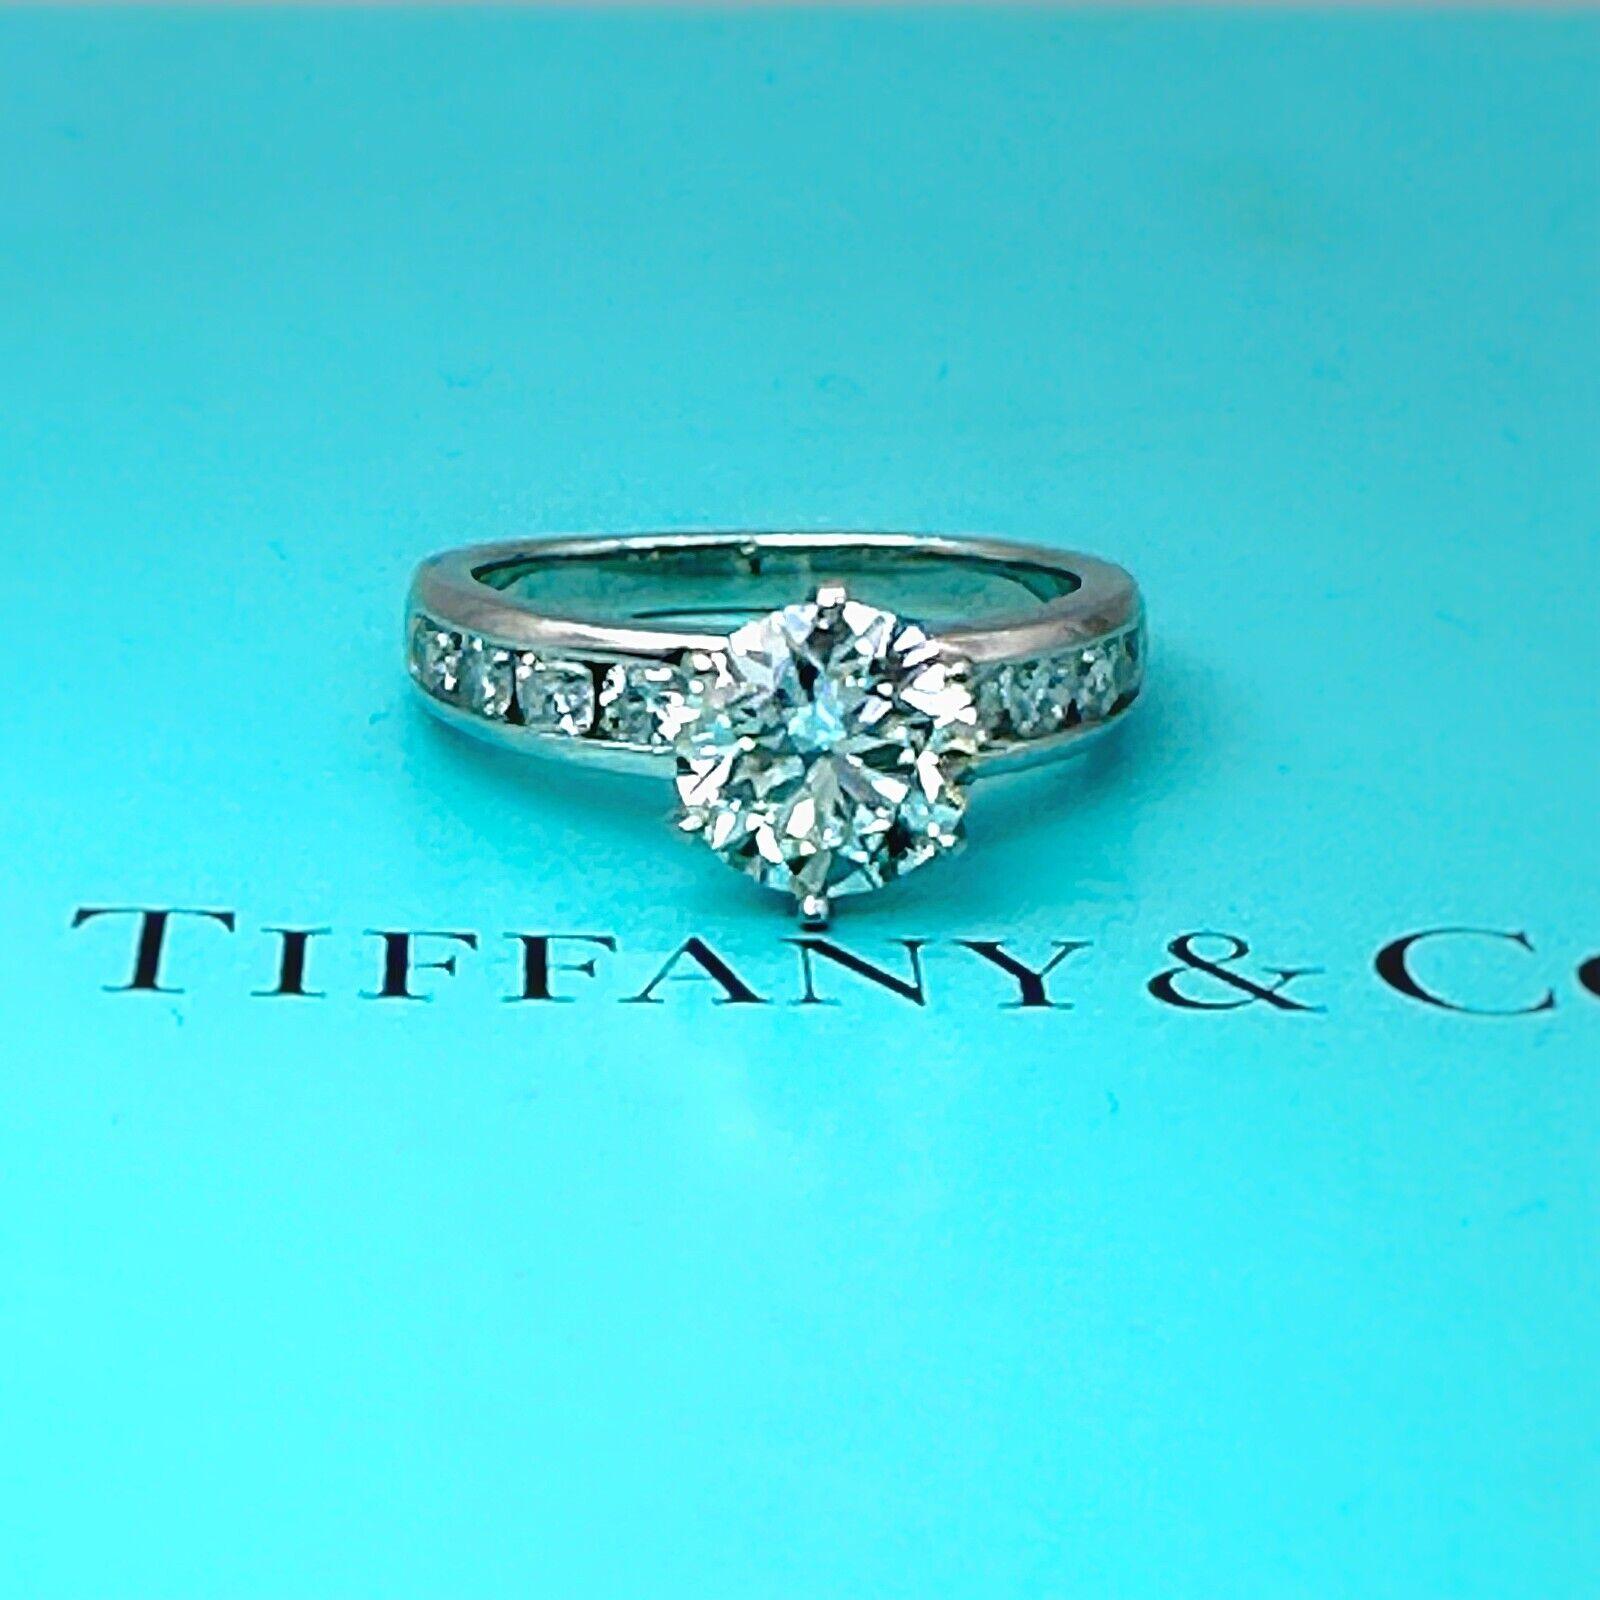 Tiffany & Co. Tiffany Setting Diamond Engagement Ring with Channel-Set Diamond Band
Style:  Channel-Set
Ref. number:  63847633
Metal:  Platinum Pt950
Size / Measurements:  7.5 / 2.50-4.35 MM
TCW:  2.75 tcw
Main Diamond:  Round Brilliant Diamond 2.01